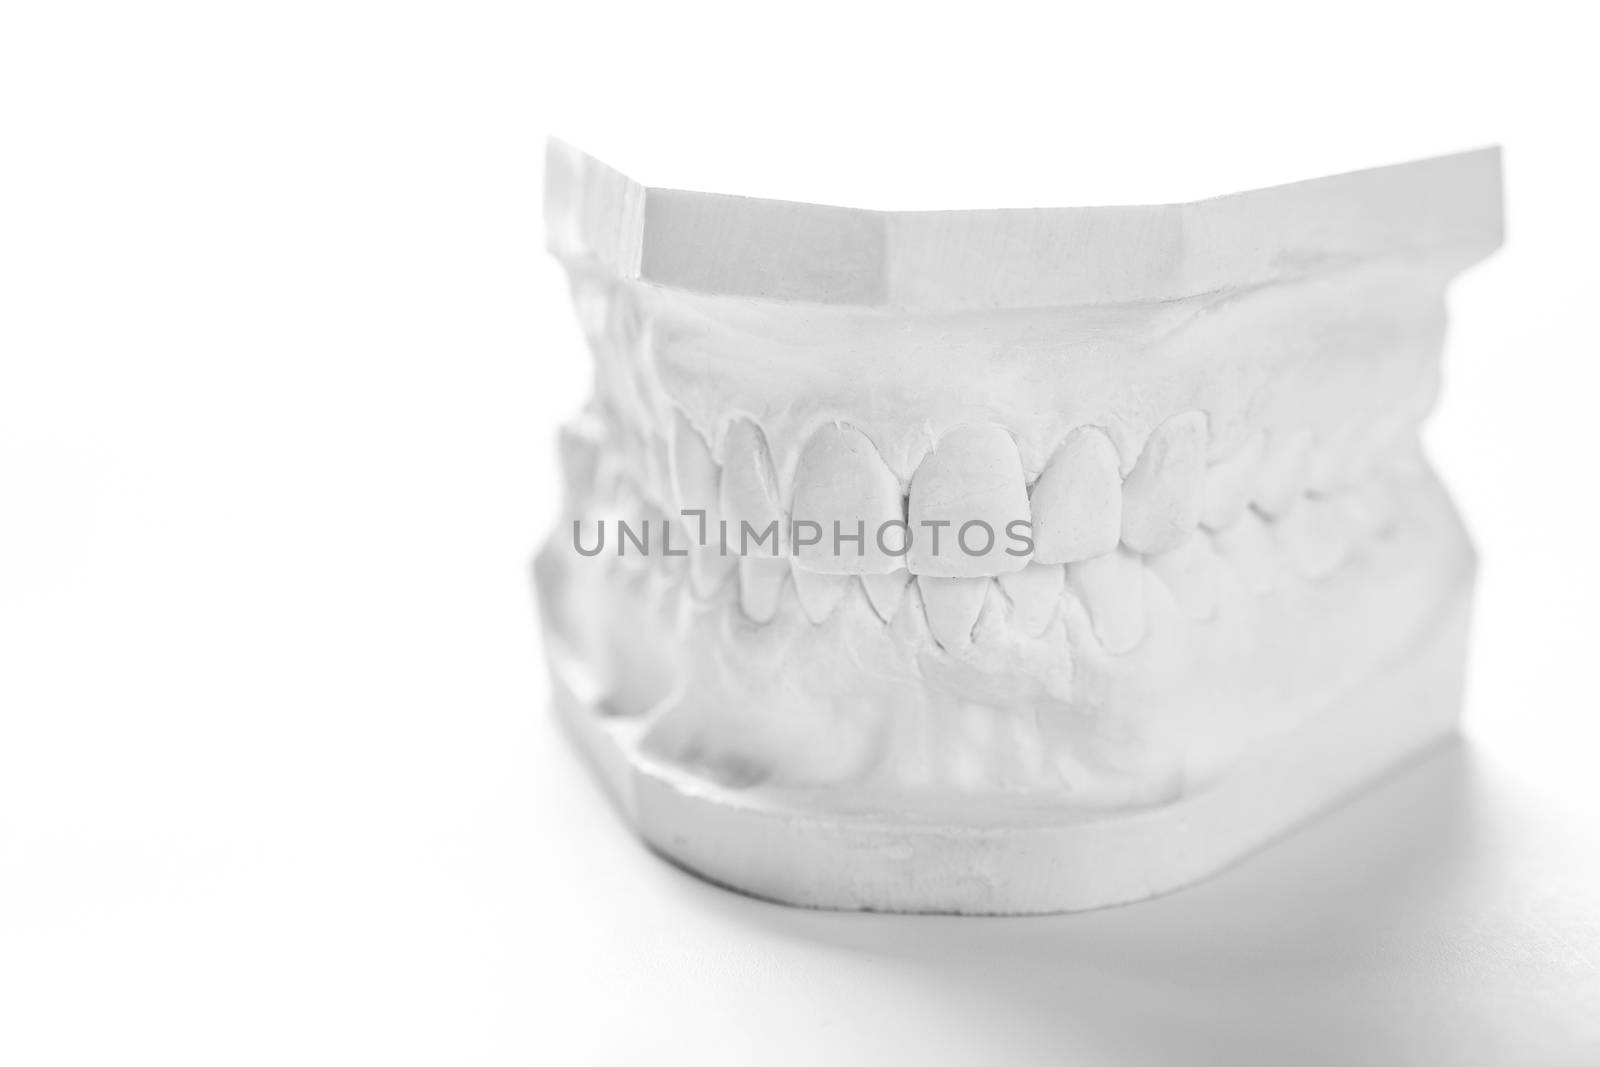 Dental casting gypsum model plaster cast stomatologic human jaws prothetic laboratory, technical shots